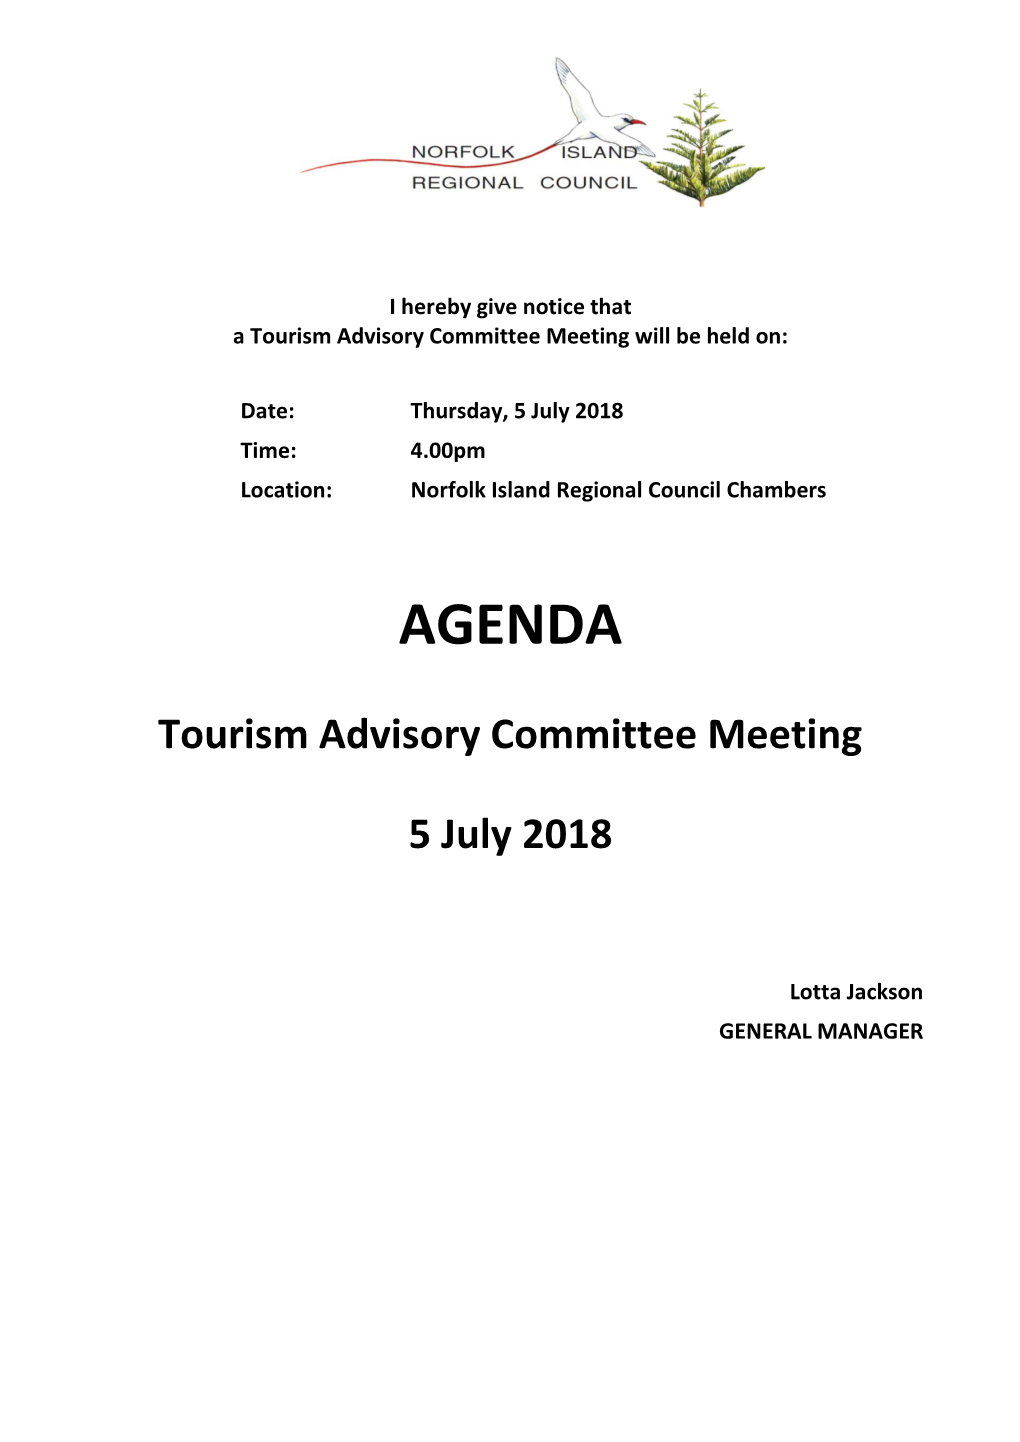 Agenda of Tourism Advisory Committee Meeting